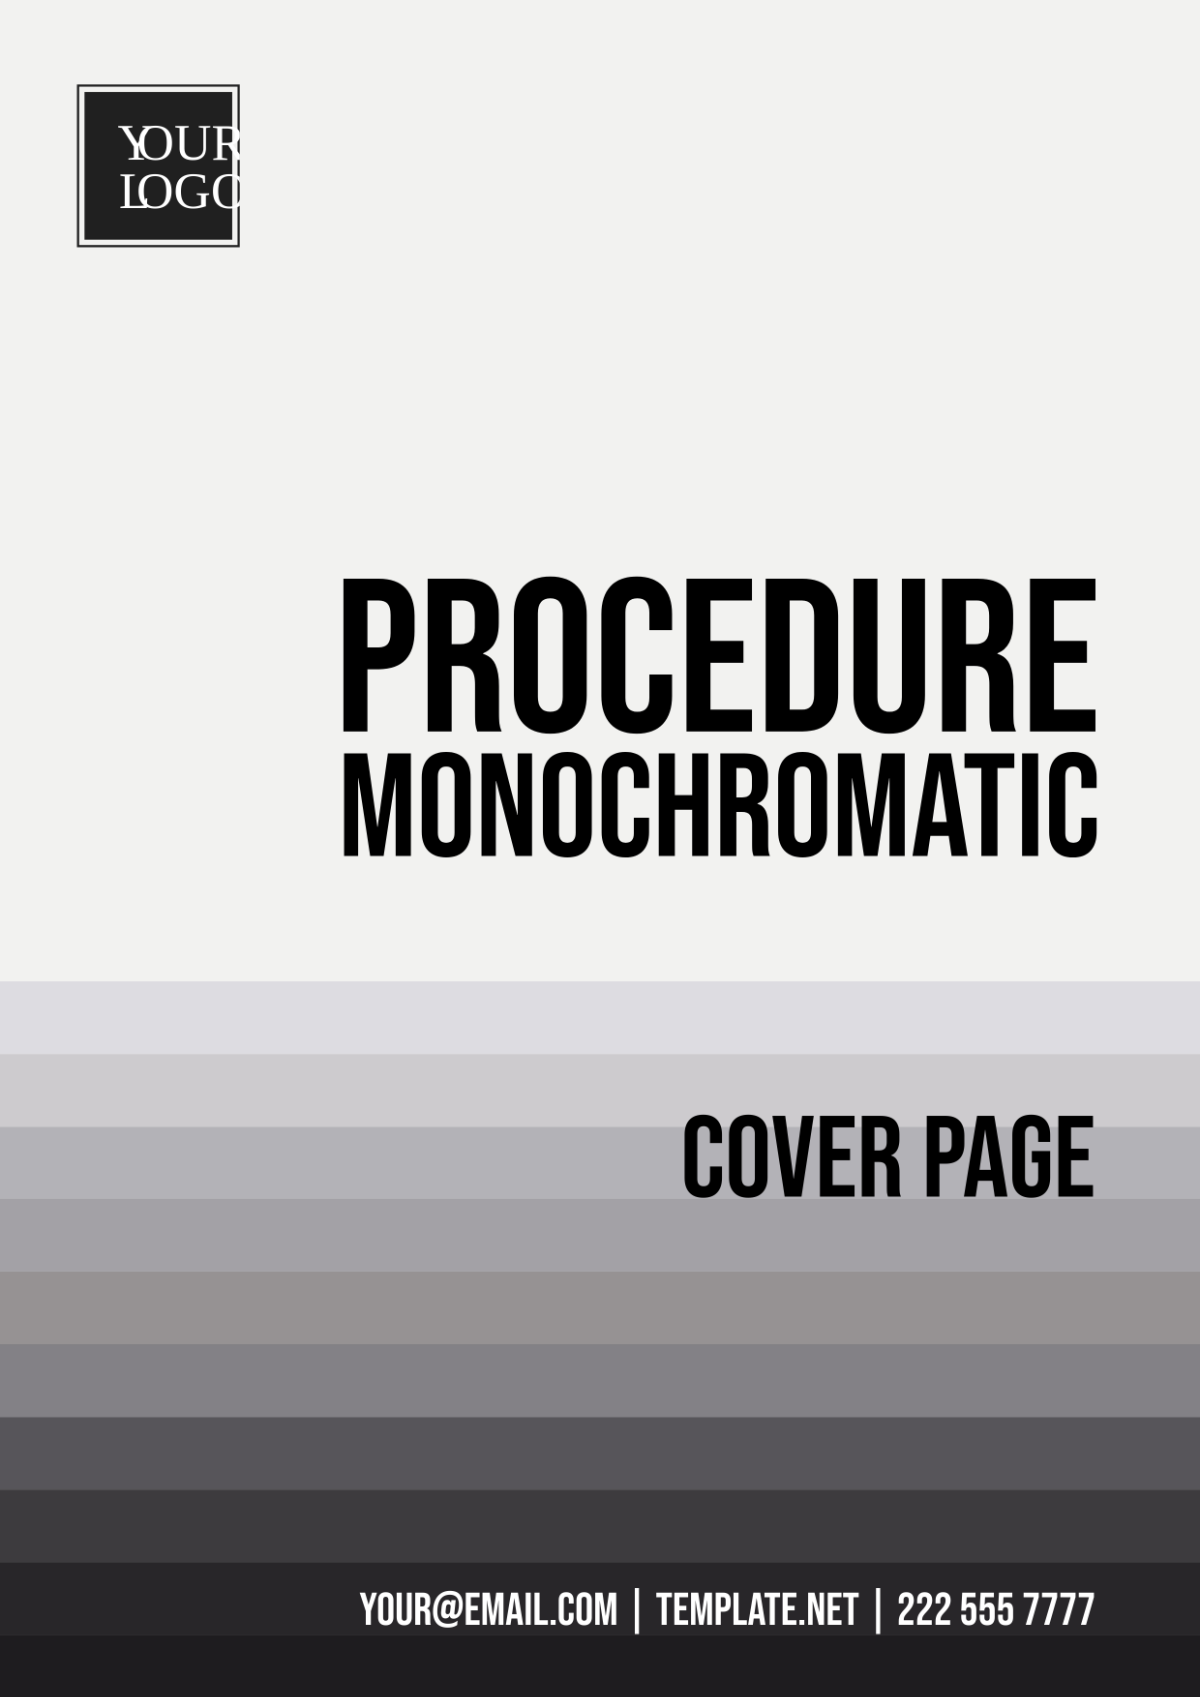 Free Procedure Monochromatic Cover Page Template